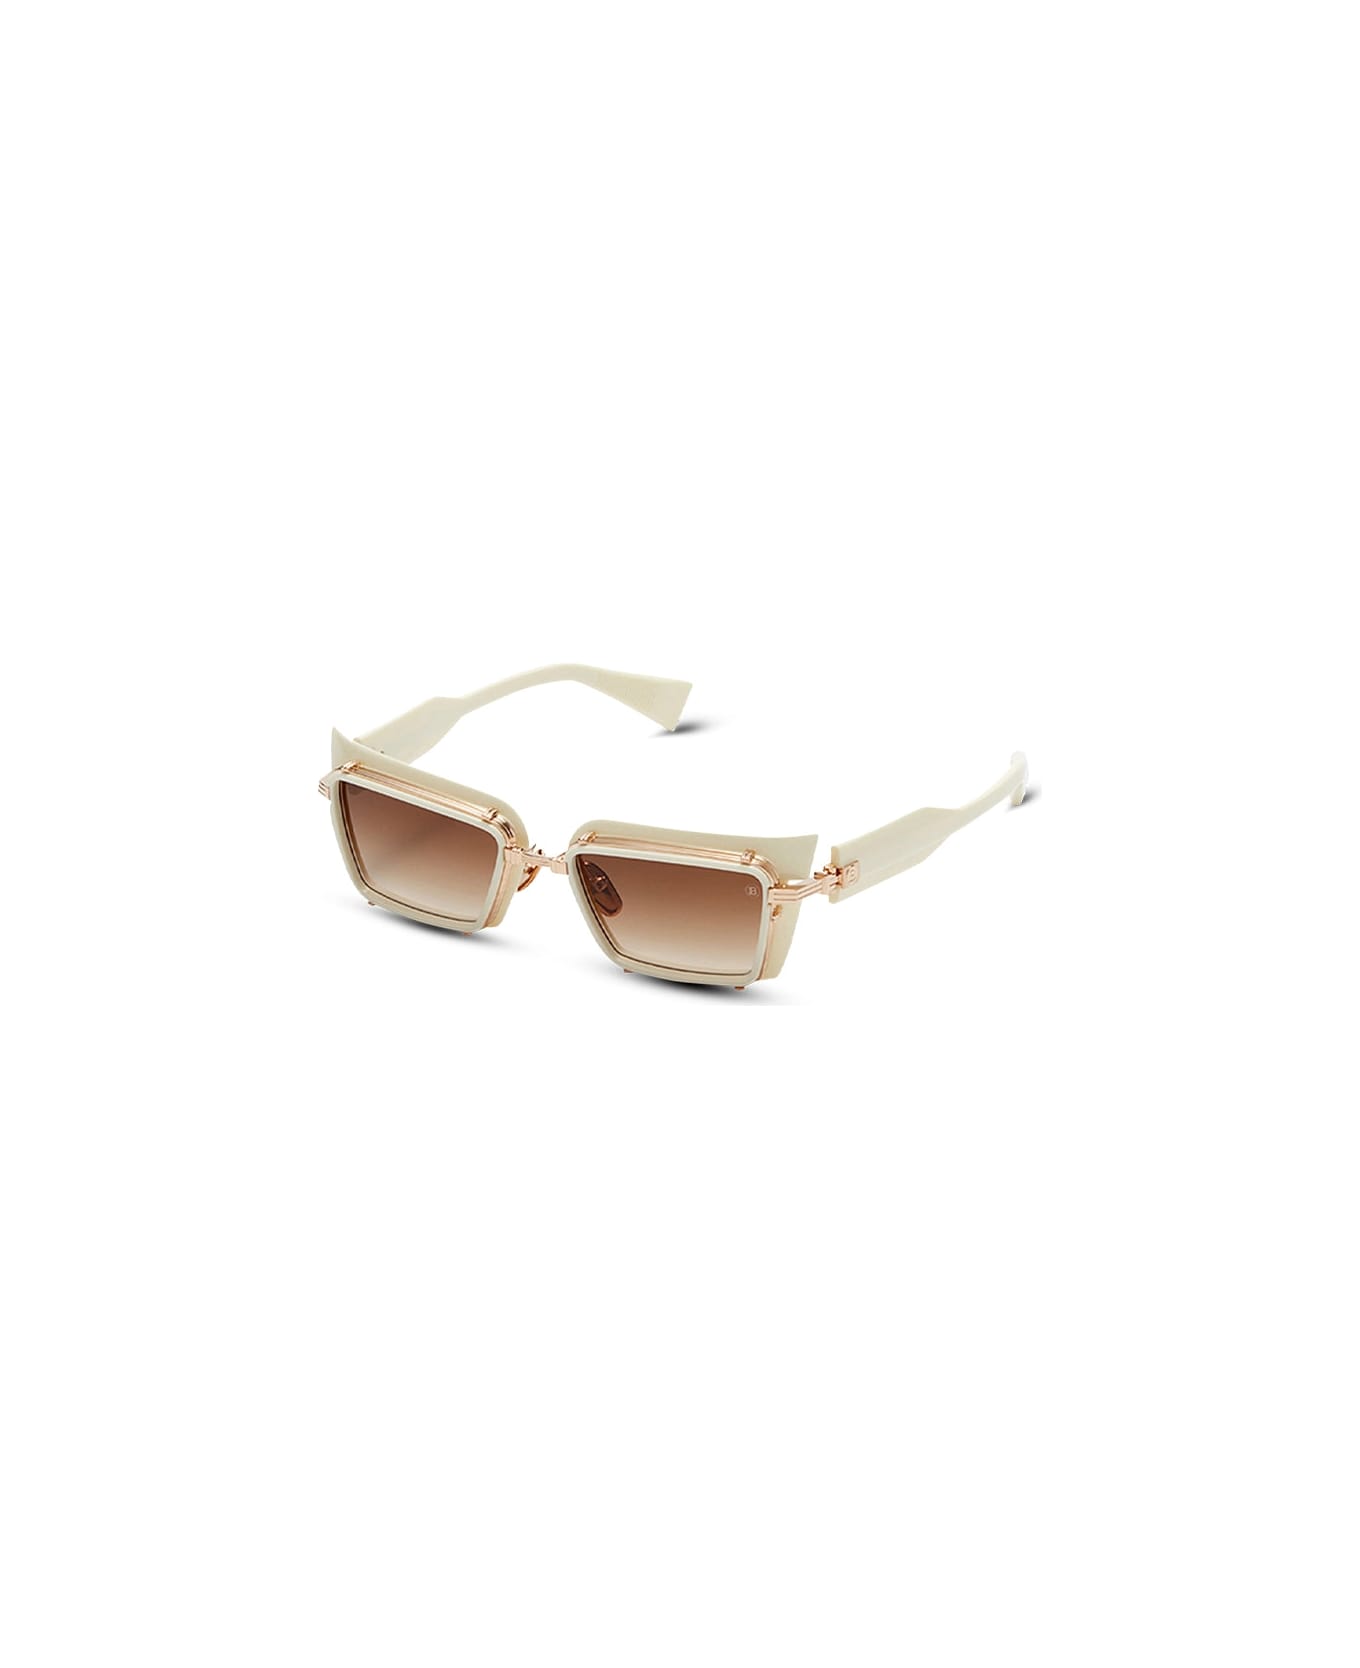 Balmain Admirable - White / Gold Sunglasses Fran Sunglasses Fran - gold, white